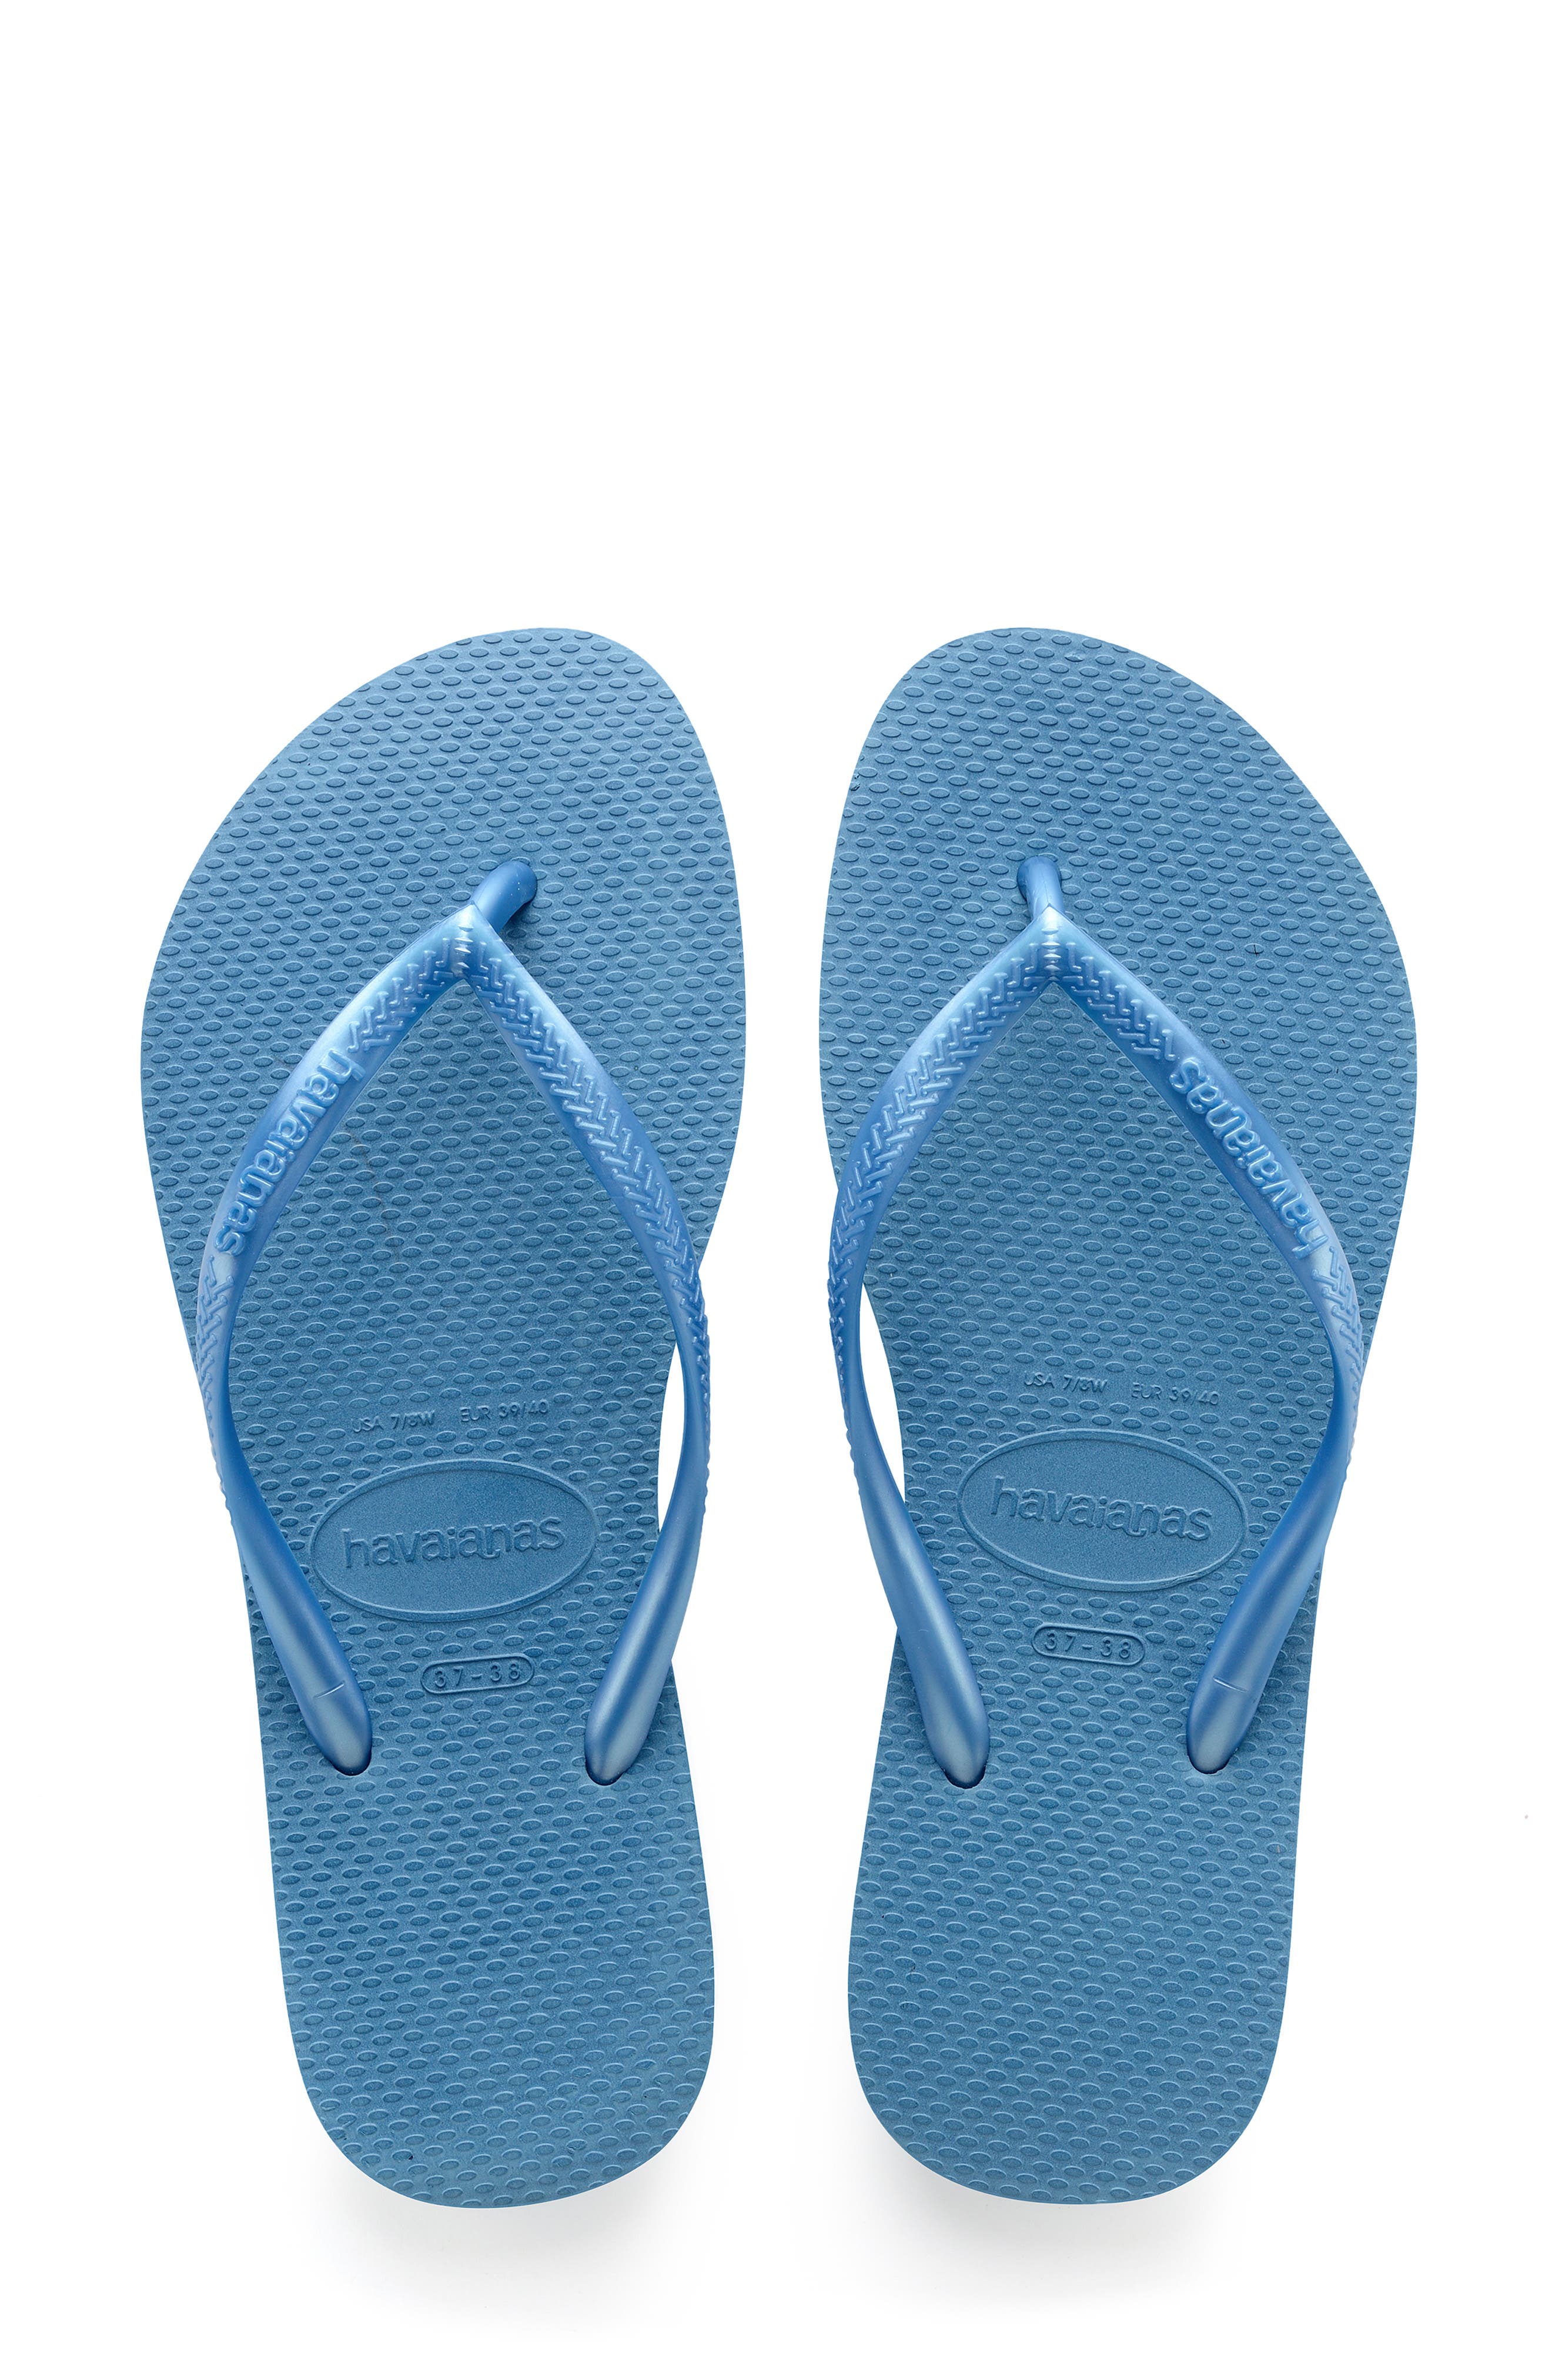 havaianas unisex flip flops